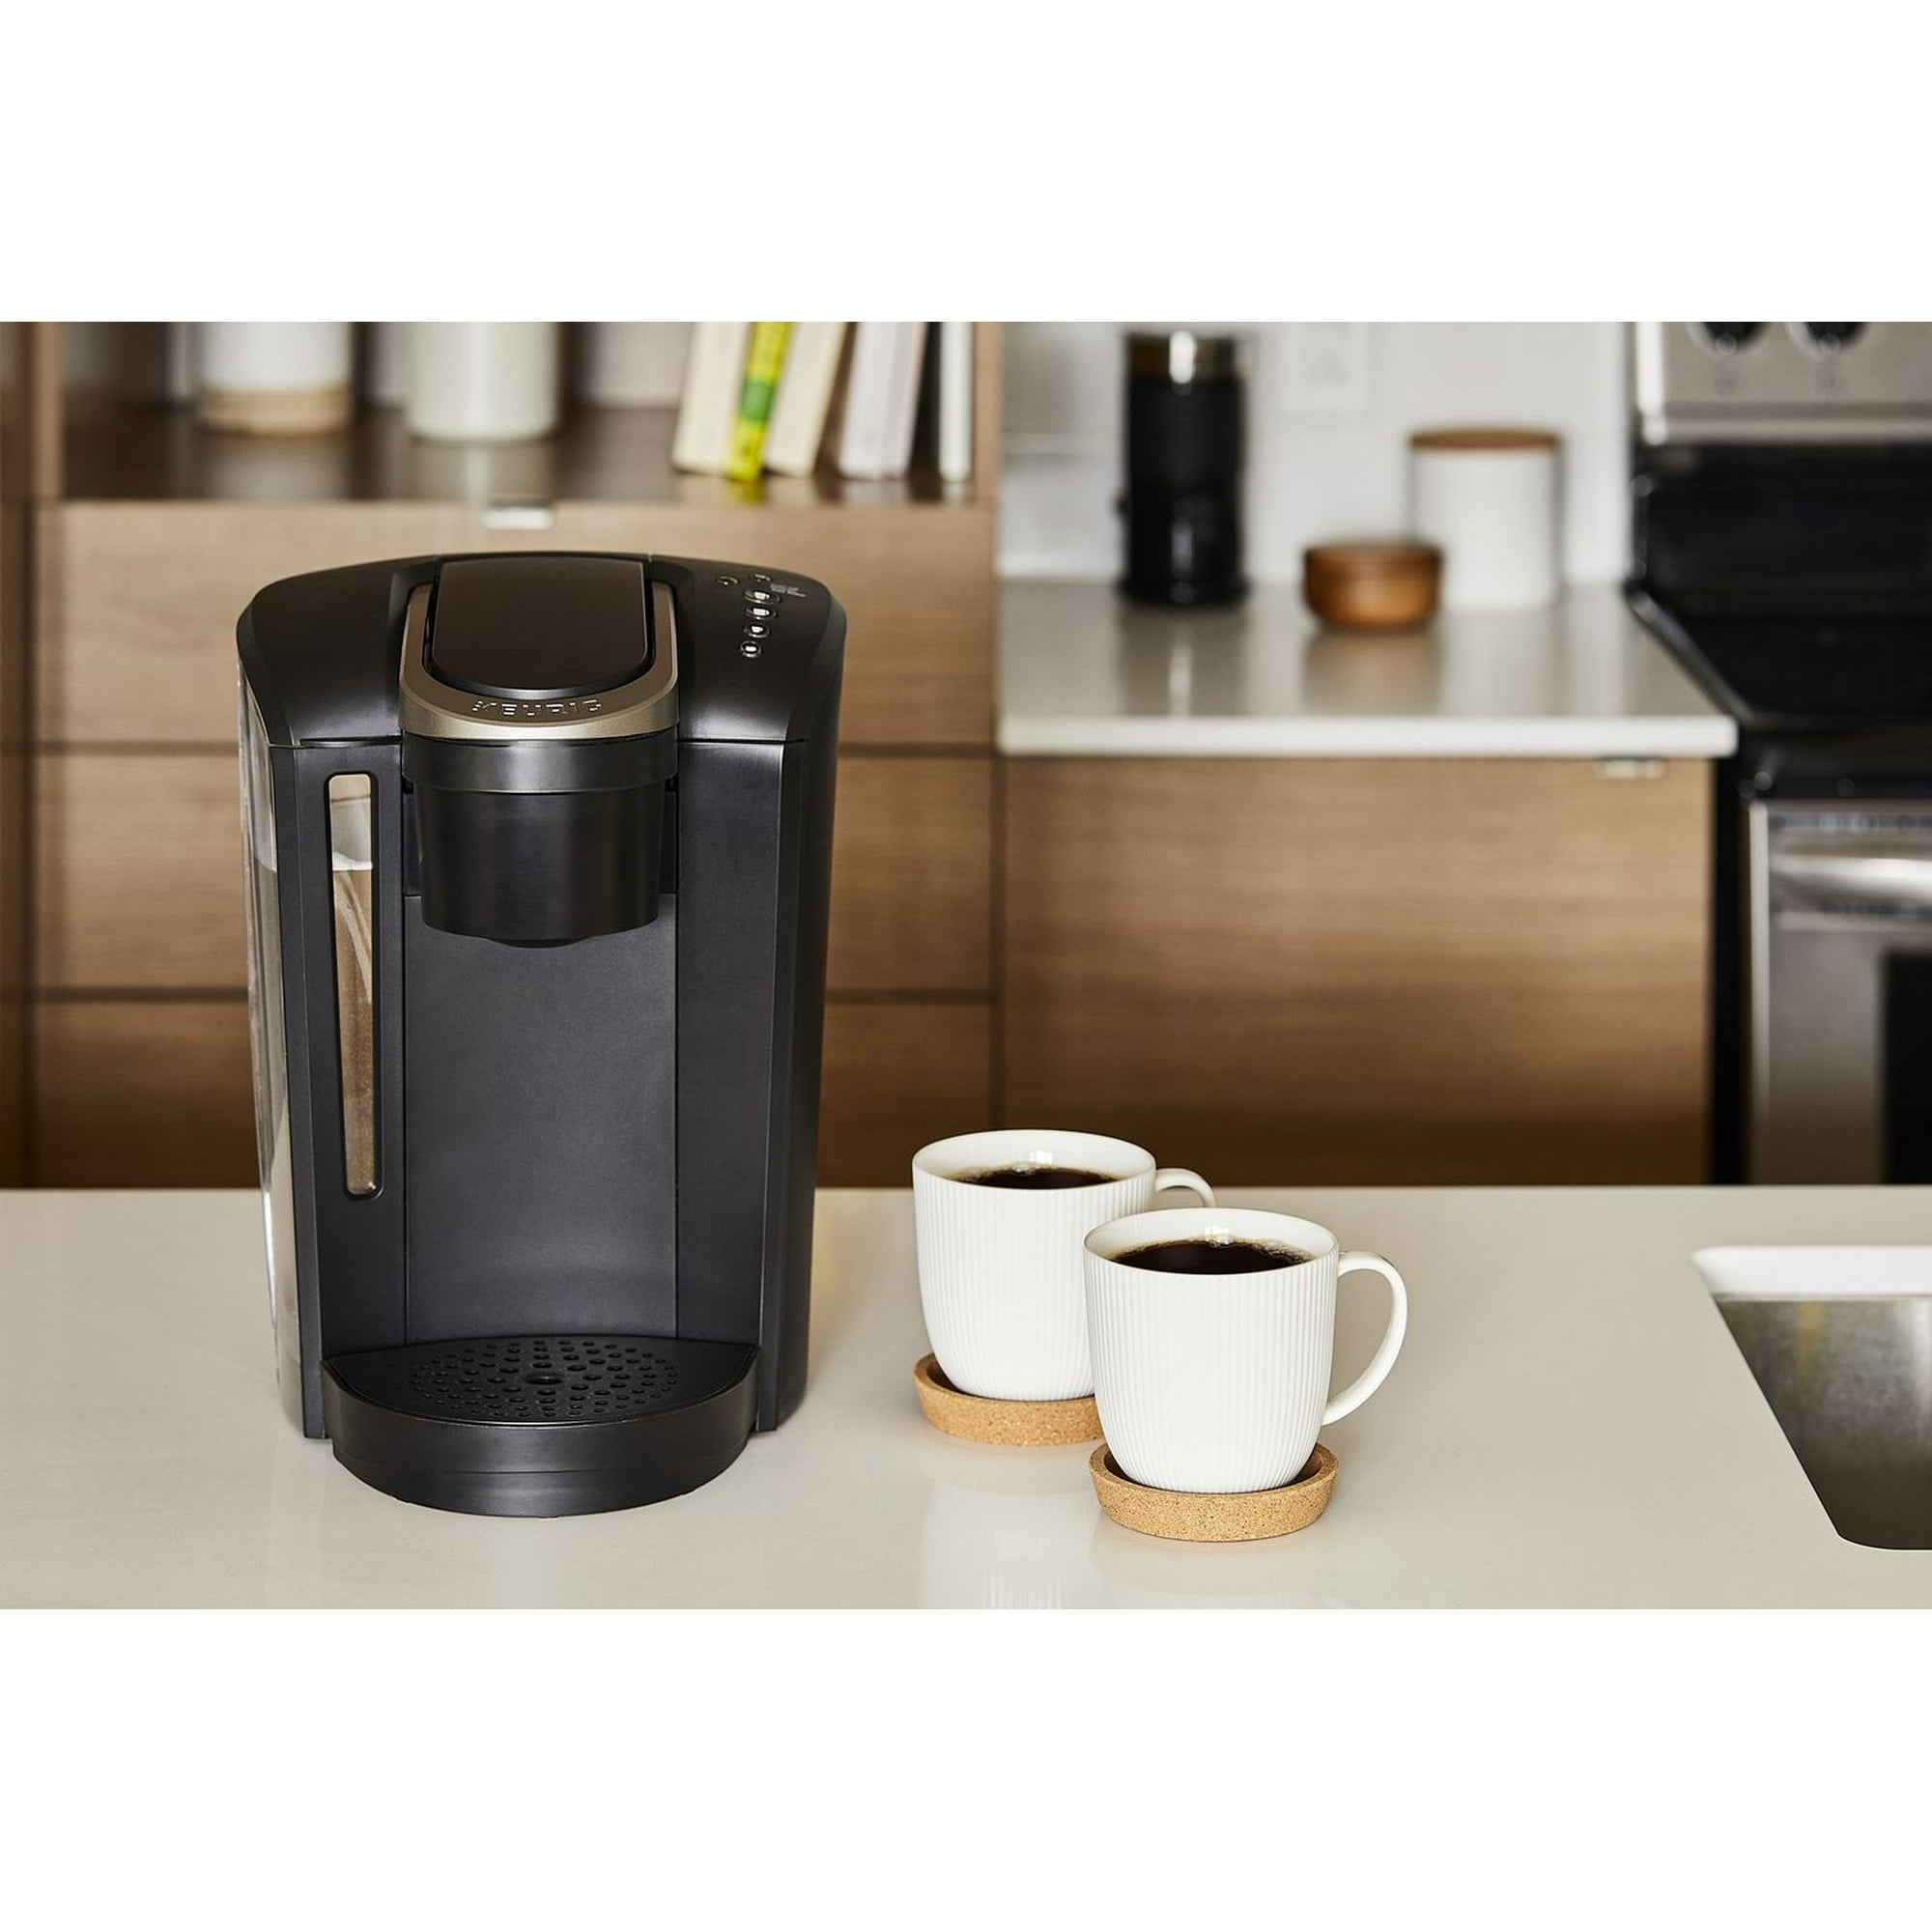 Keurig K-Select Coffee Maker, Single Serve K-Cup Pod Coffee Brewer